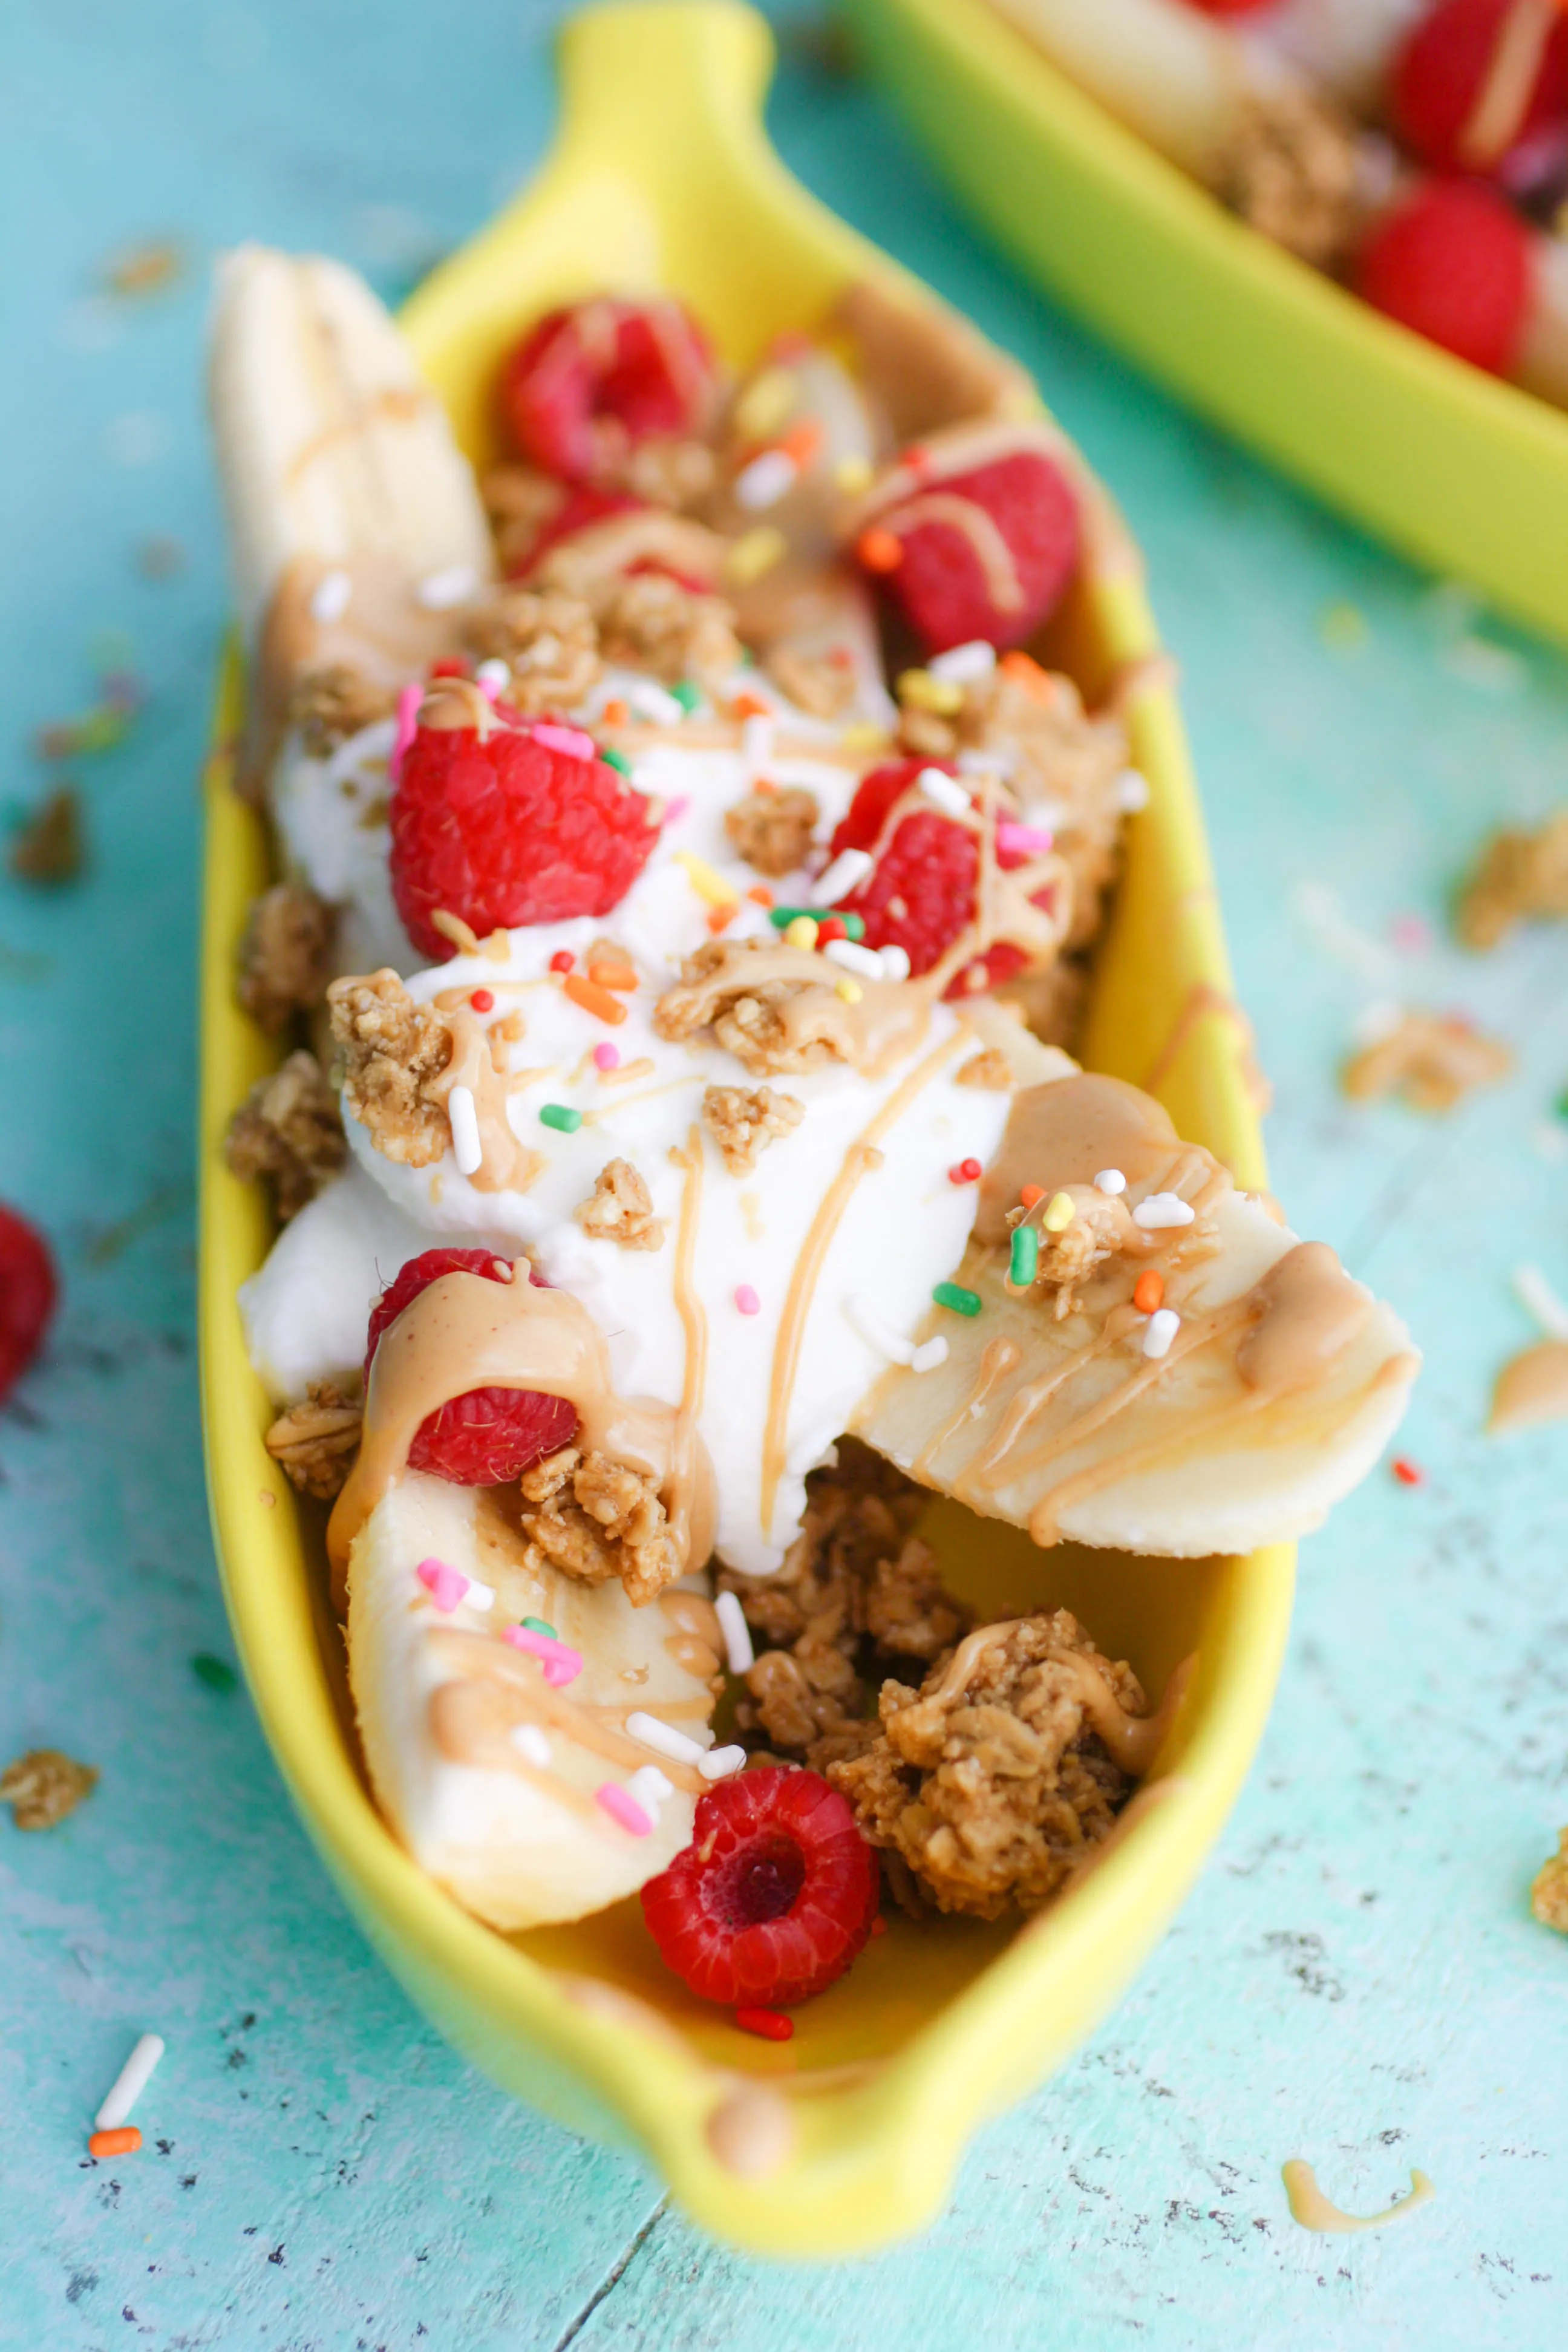 “Peanut Butter & Jelly" Breakfast Banana Splits will be the stars of your breakfast table! “Peanut Butter & Jelly" Breakfast Banana Splits are so fabulous for a special breakfast!